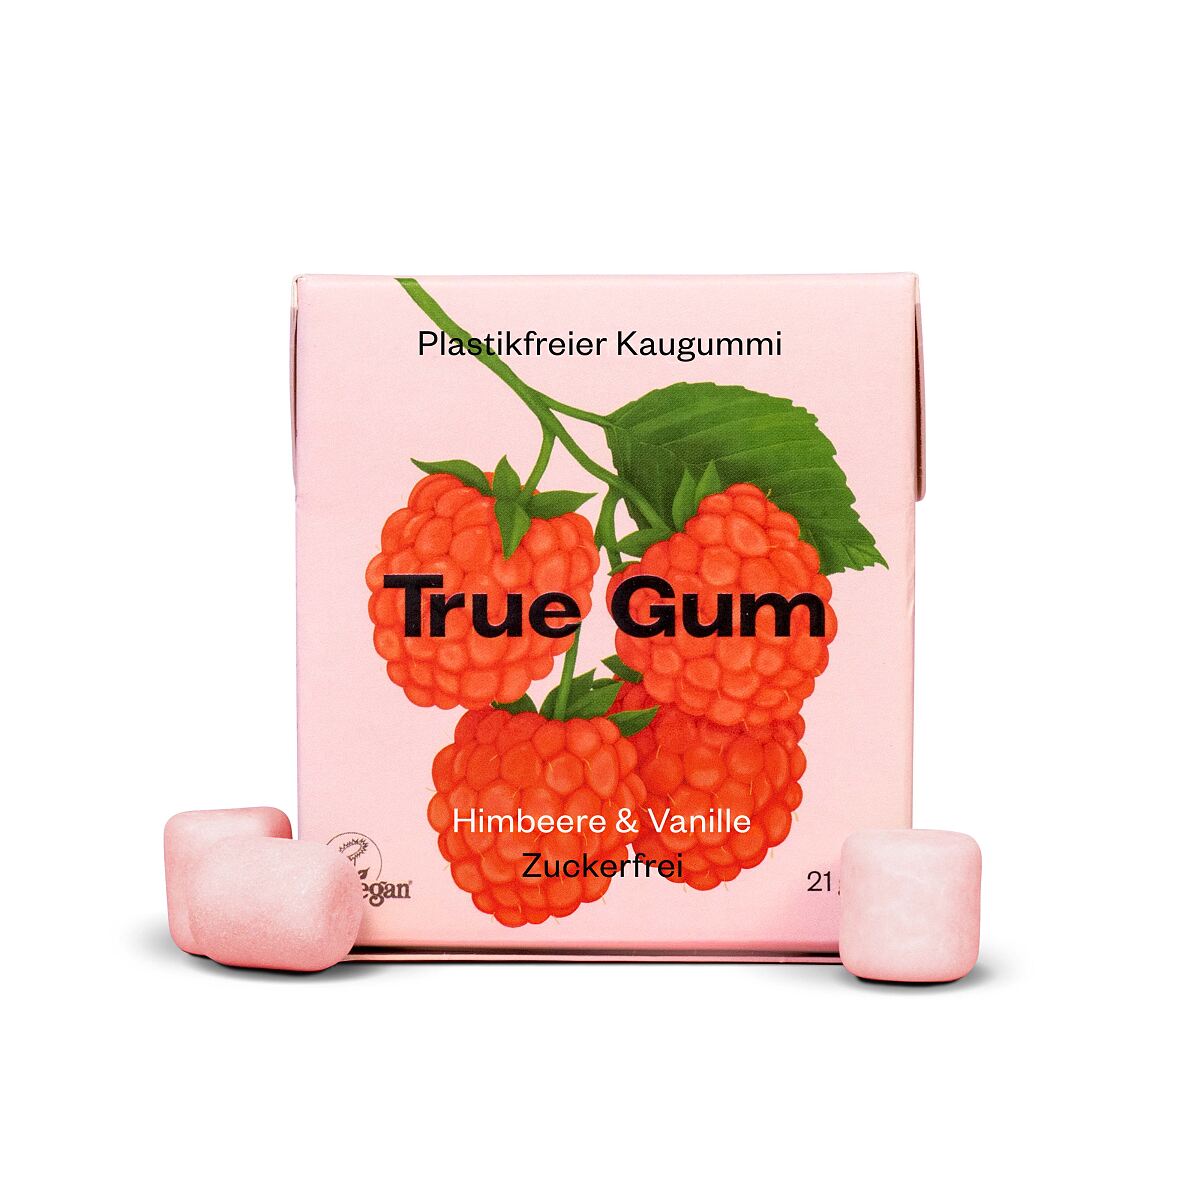 True Gum_Raspberry_EUR 1,99 low